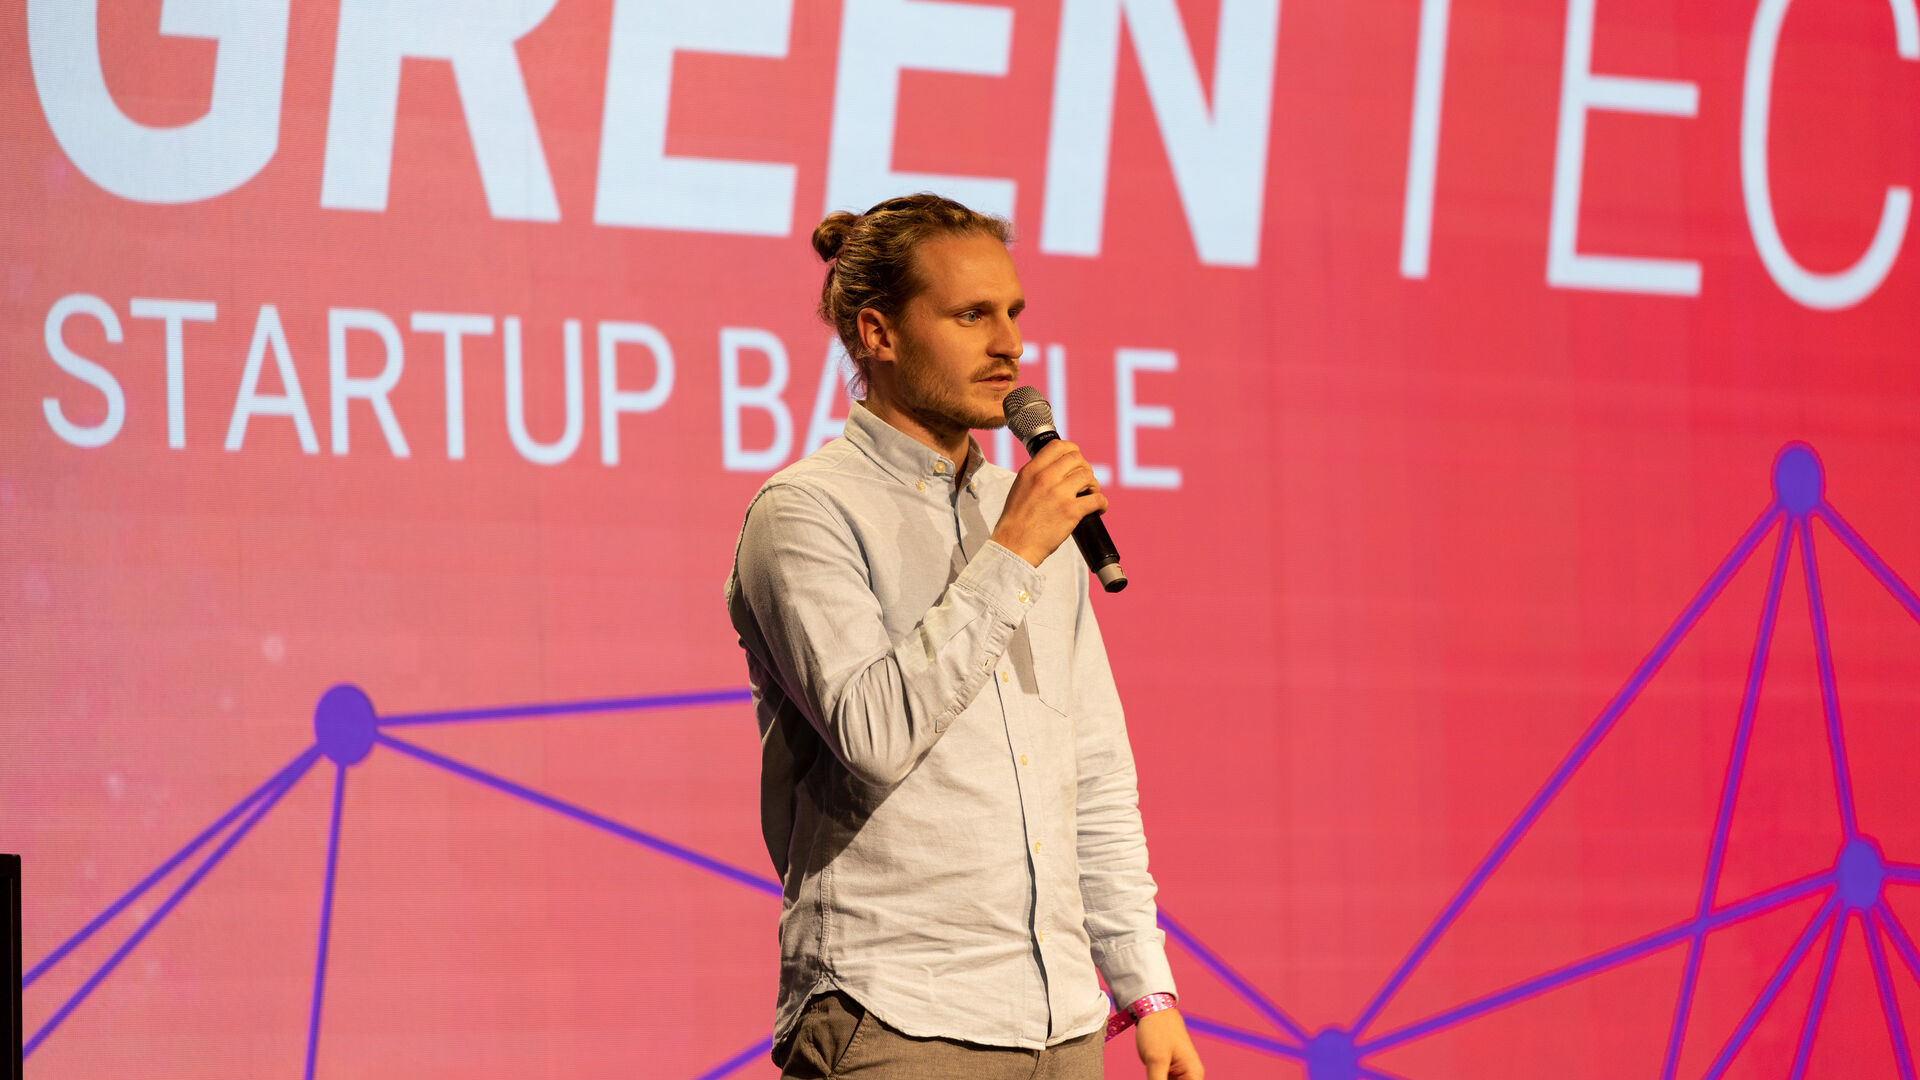 Swiss Digital Days: η τελική εκδήλωση των "Swiss Digital Days" 2022 στο Freiruum στο Zug (Zug) στις 27 Οκτωβρίου: η τελετή βράβευσης της πρωτοβουλίας "Greentech Startup Battle" με τη νίκη του viboo